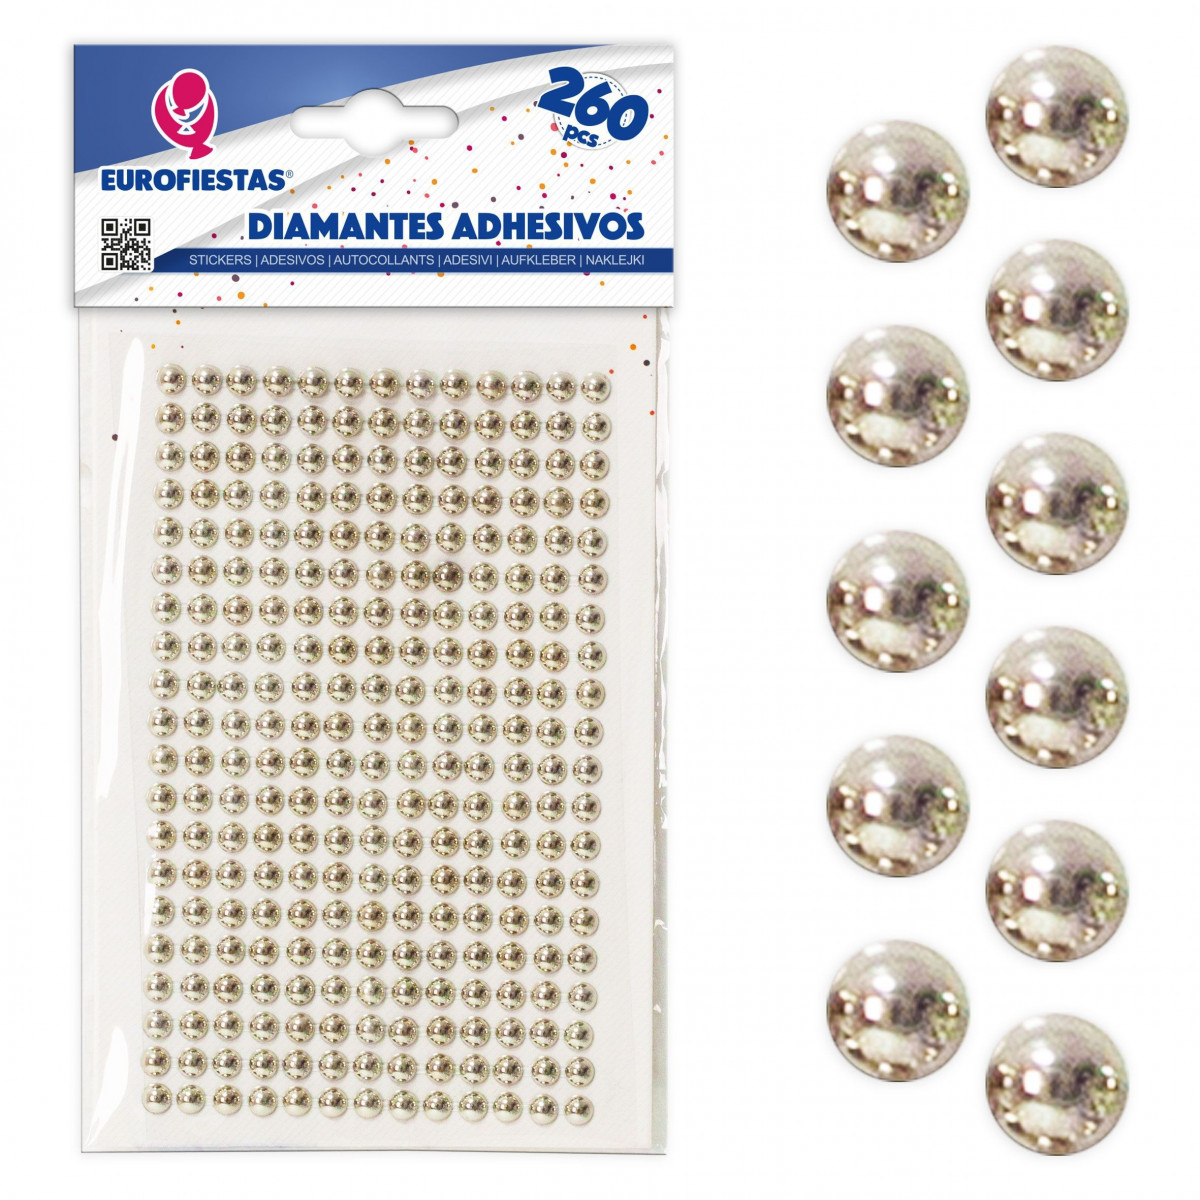 260 diamantes adhesivos med plata chapado